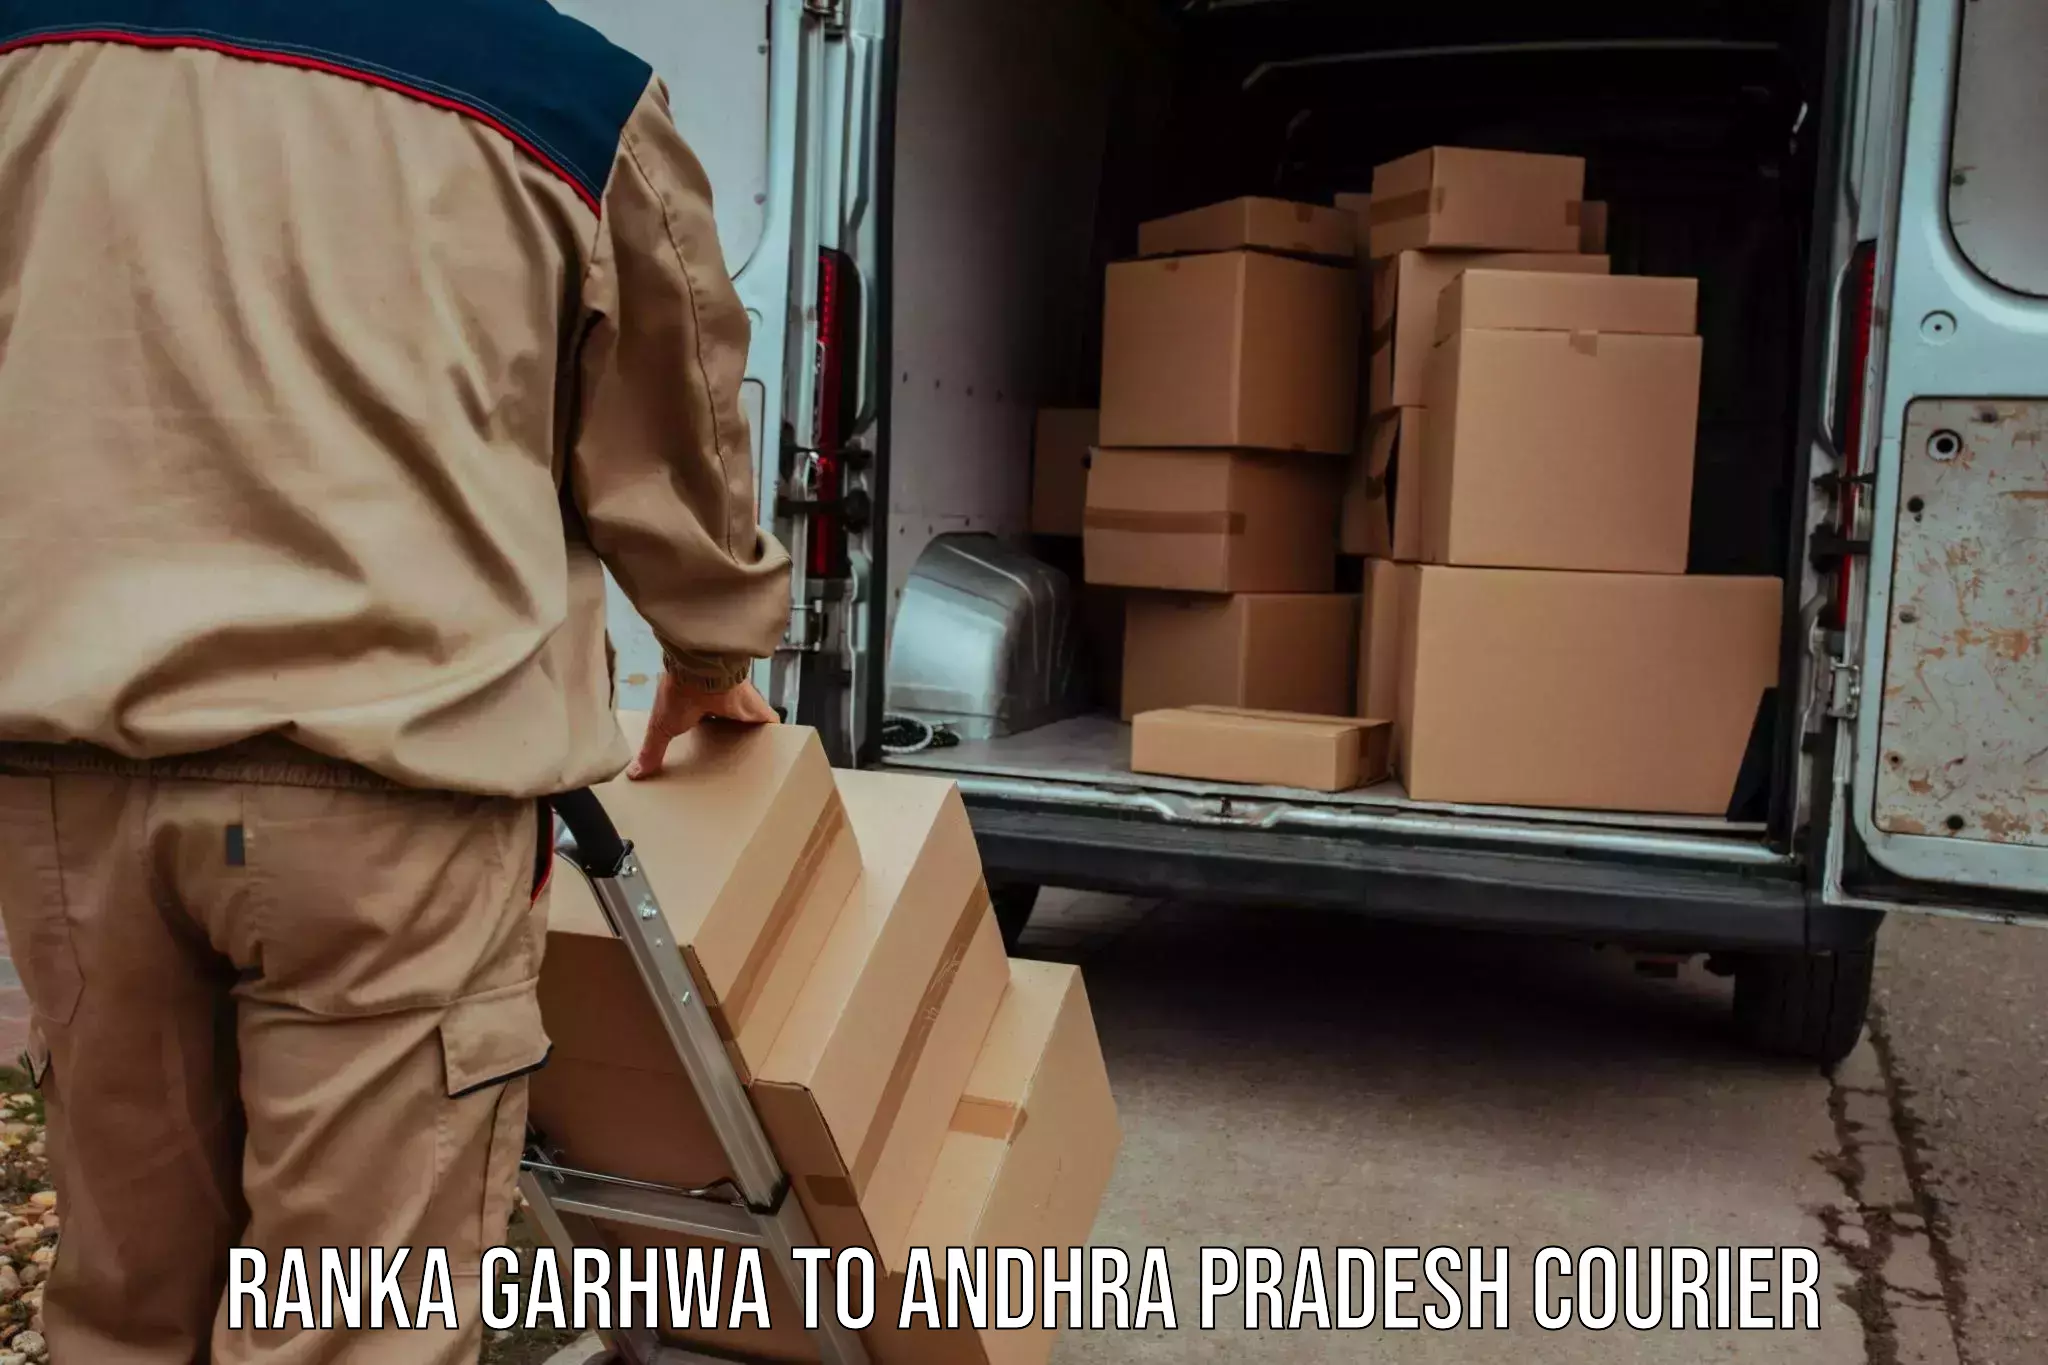 Multi-carrier shipping Ranka Garhwa to Puttur Tirupati